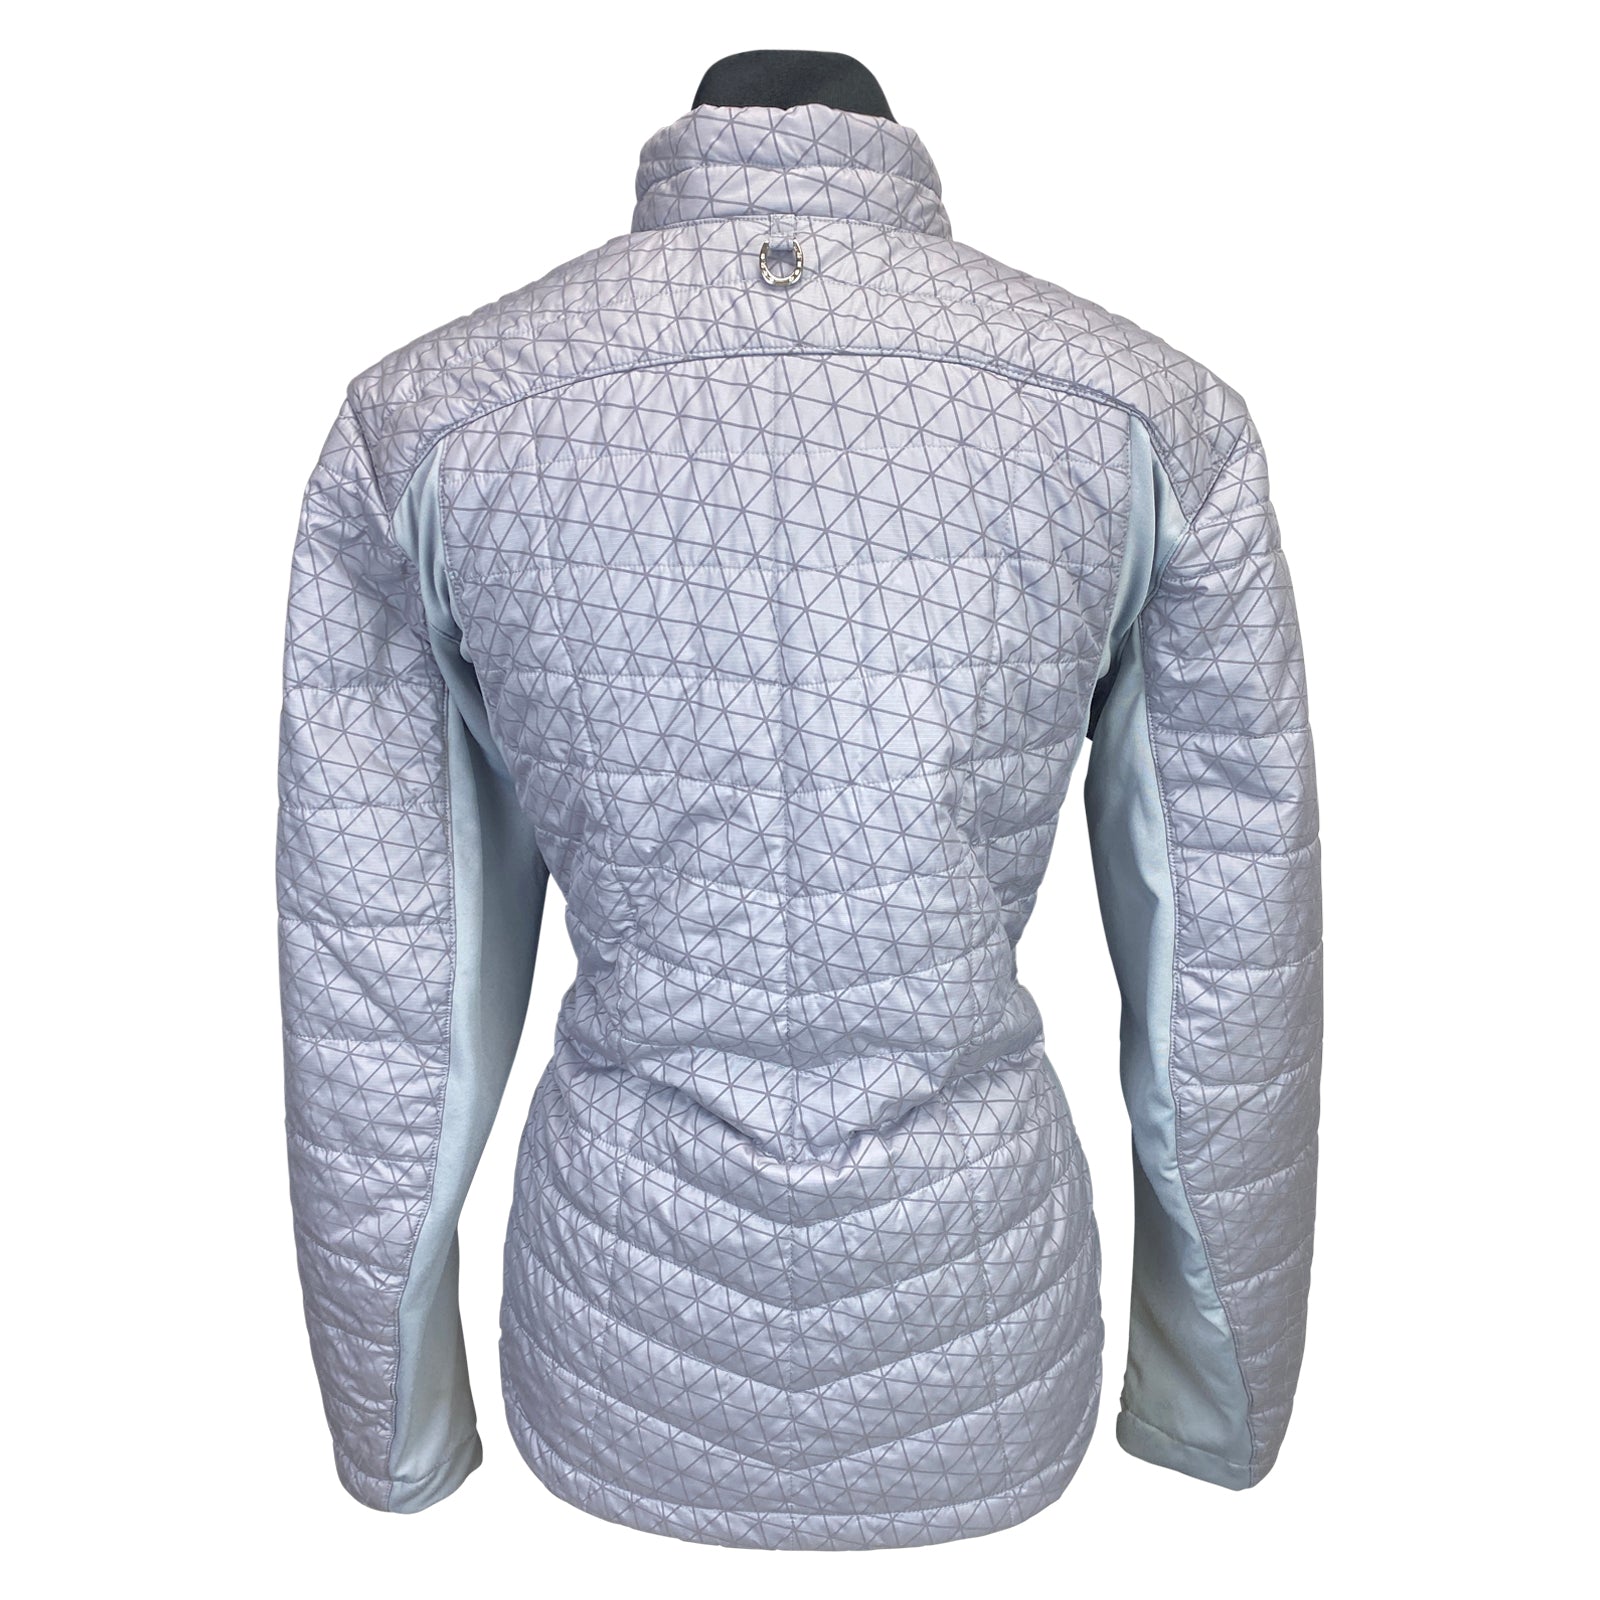 Ariat TEK 2.0 'Volt' Reflective Jacket in Grey